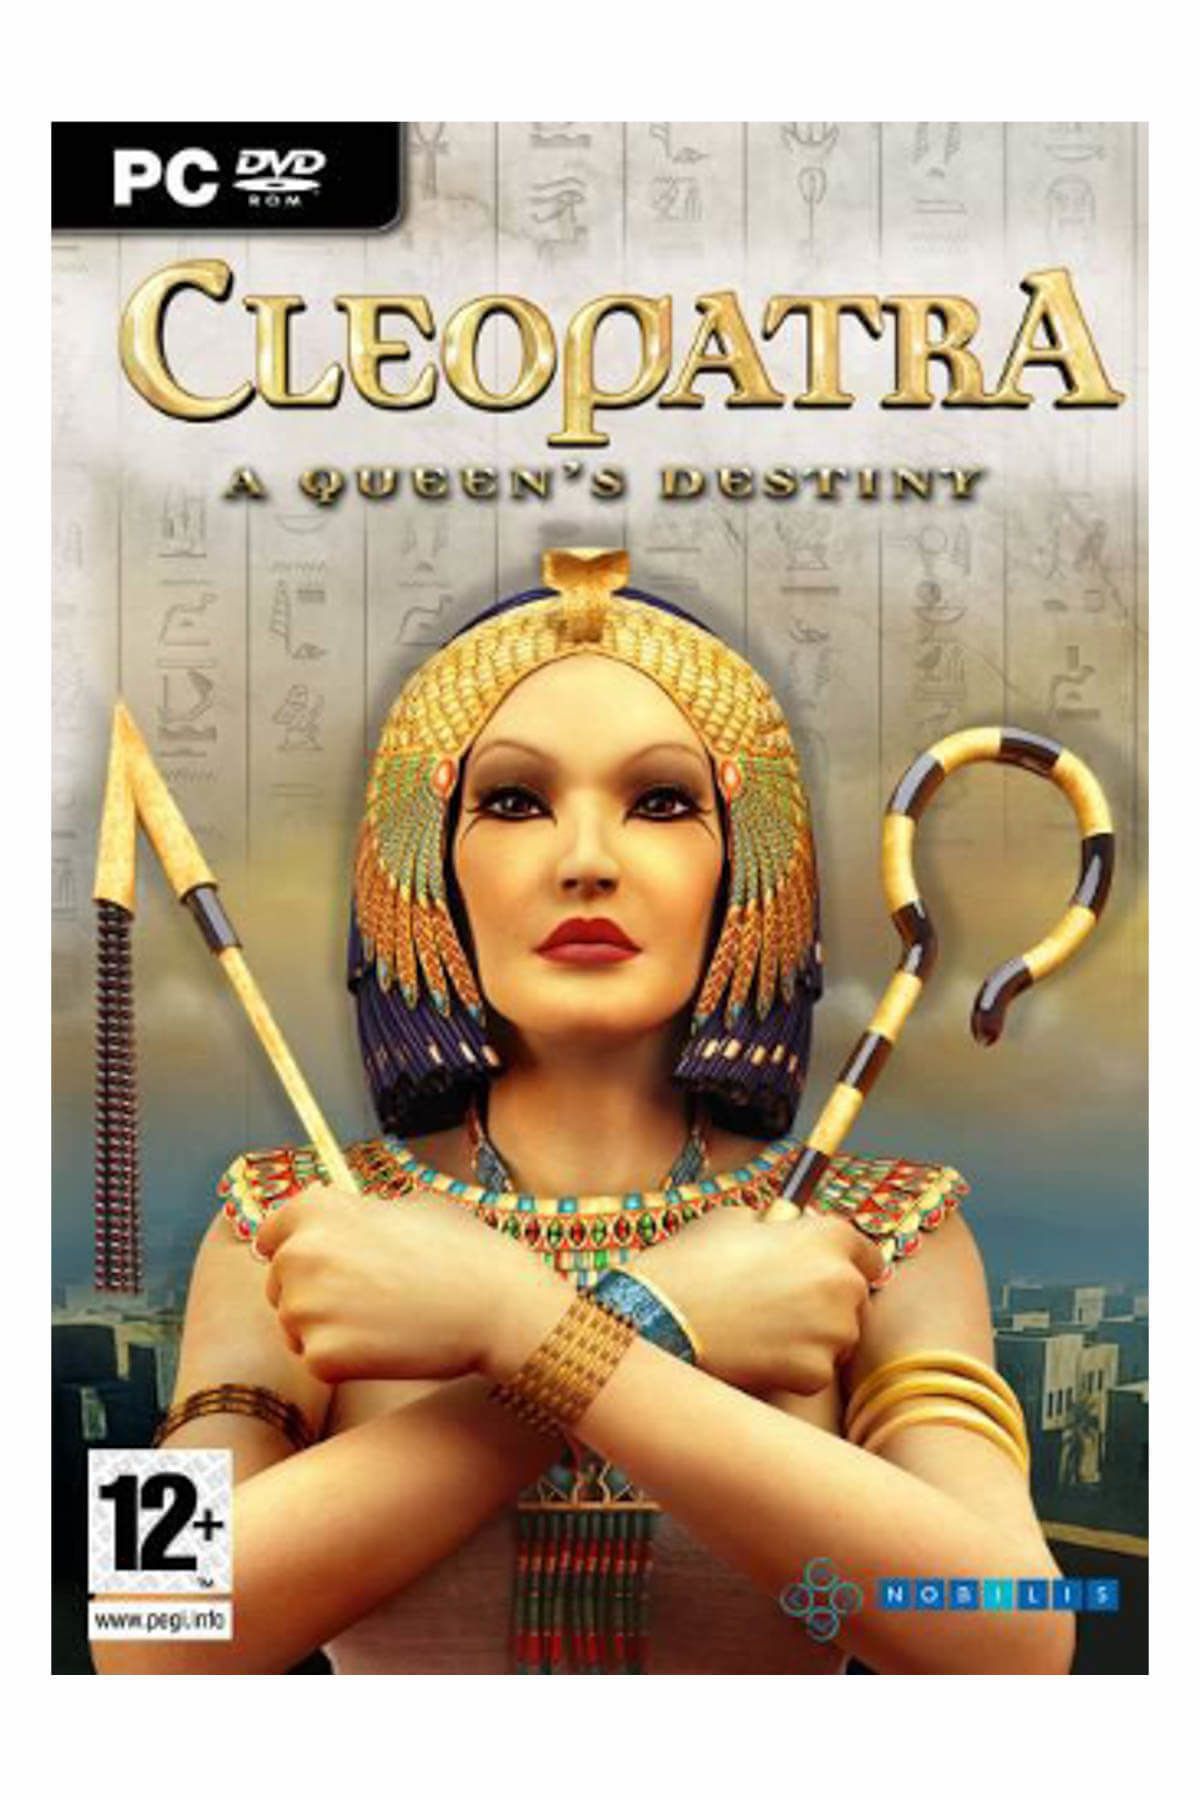 FOCUS GAME Pc Cleopatra A Queens Destiny